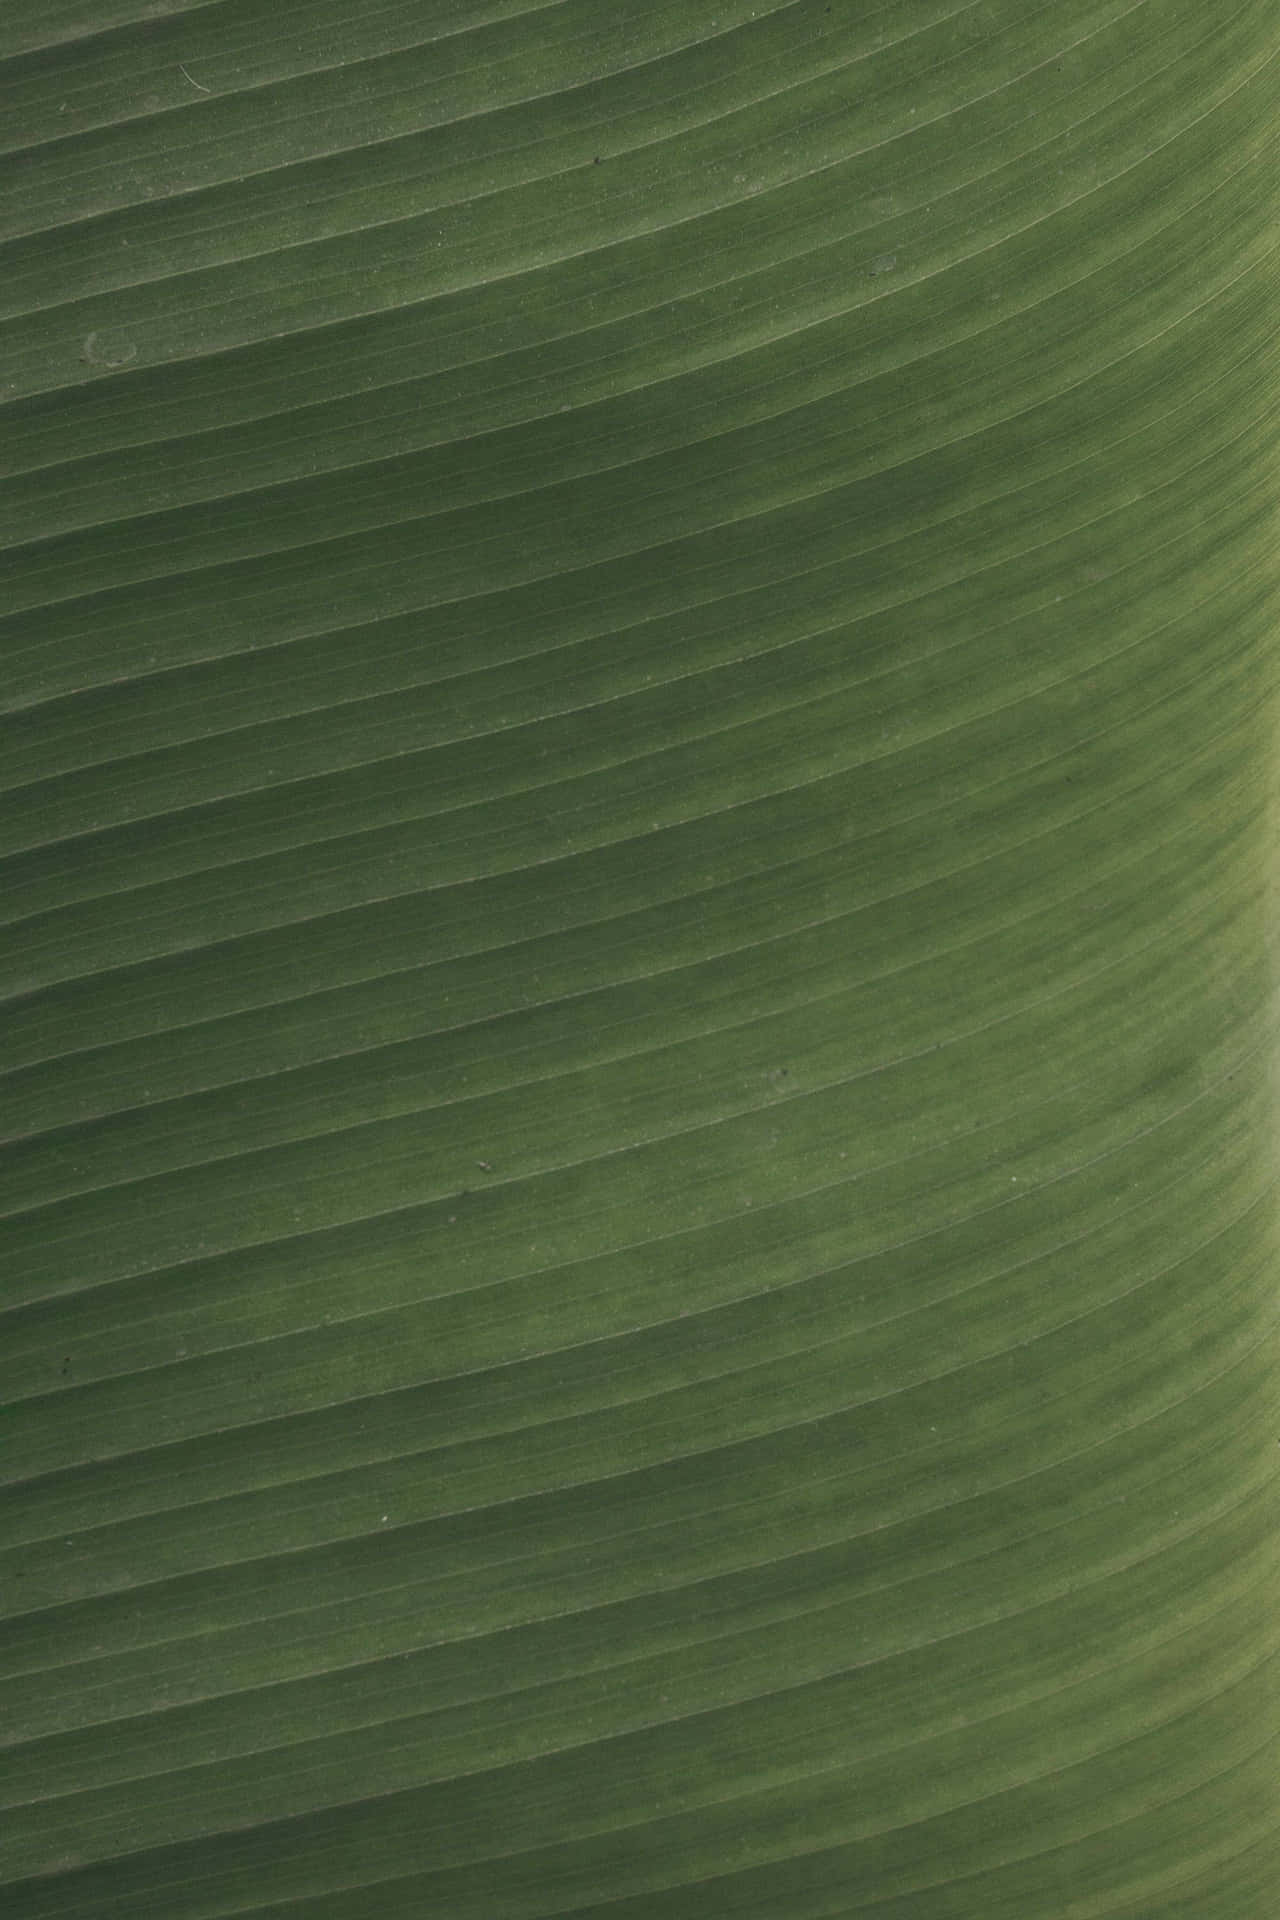 Amazing Green Leaf Texture Background